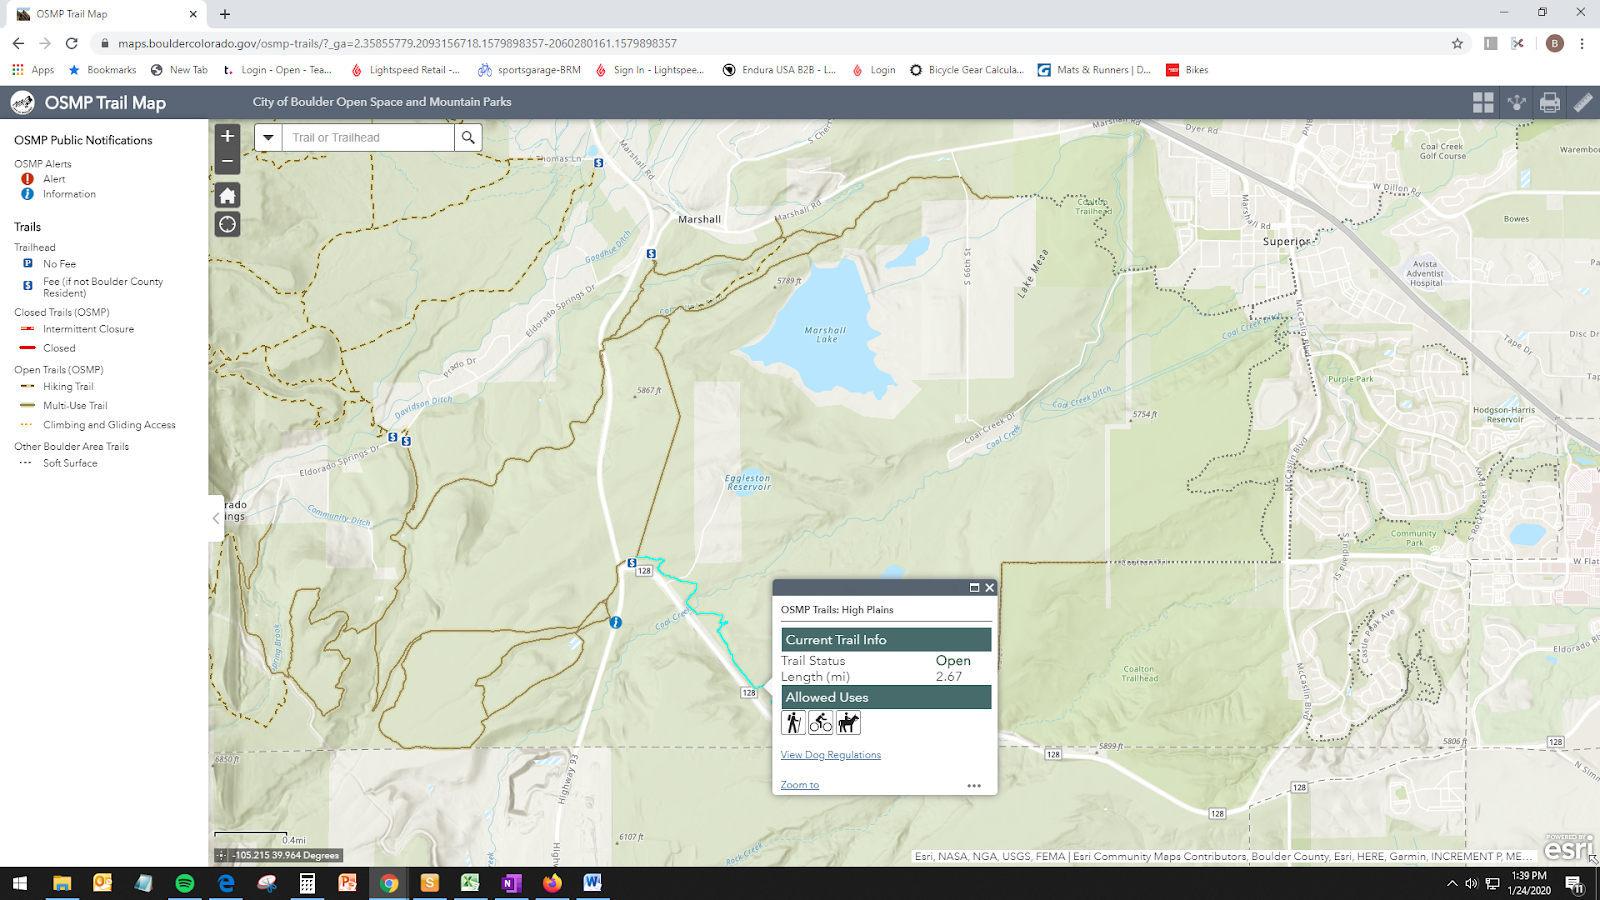 Bouldercounty.gov trail conditions map